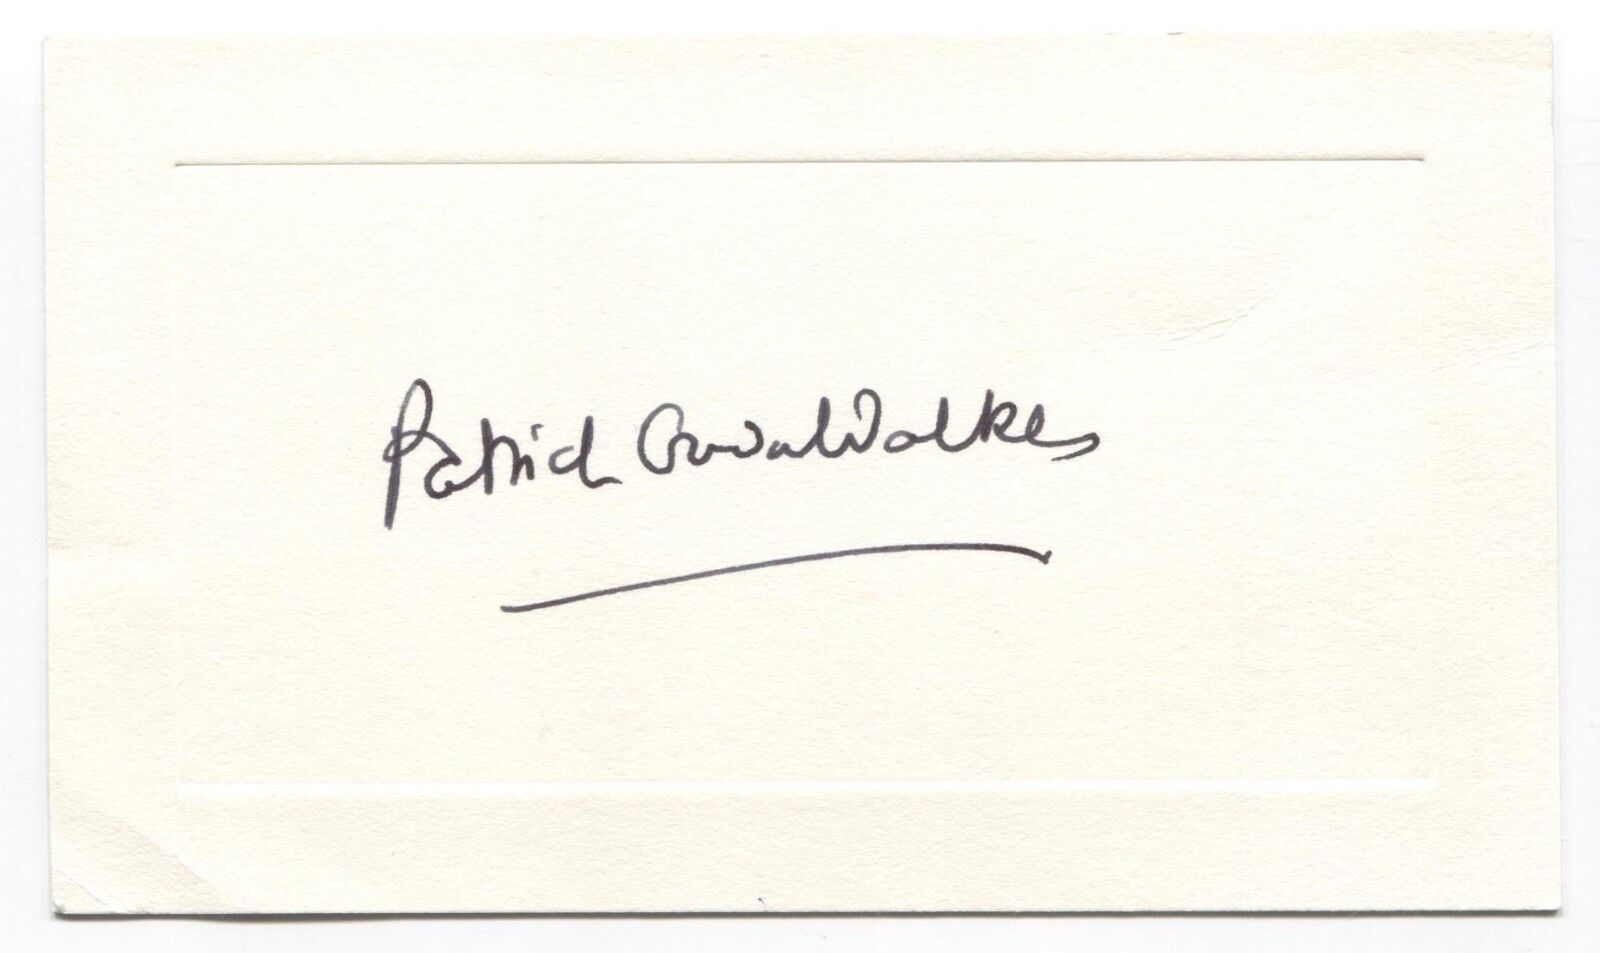 Patrick Gordon Walker Signed Card Autographed Signature British Politician 